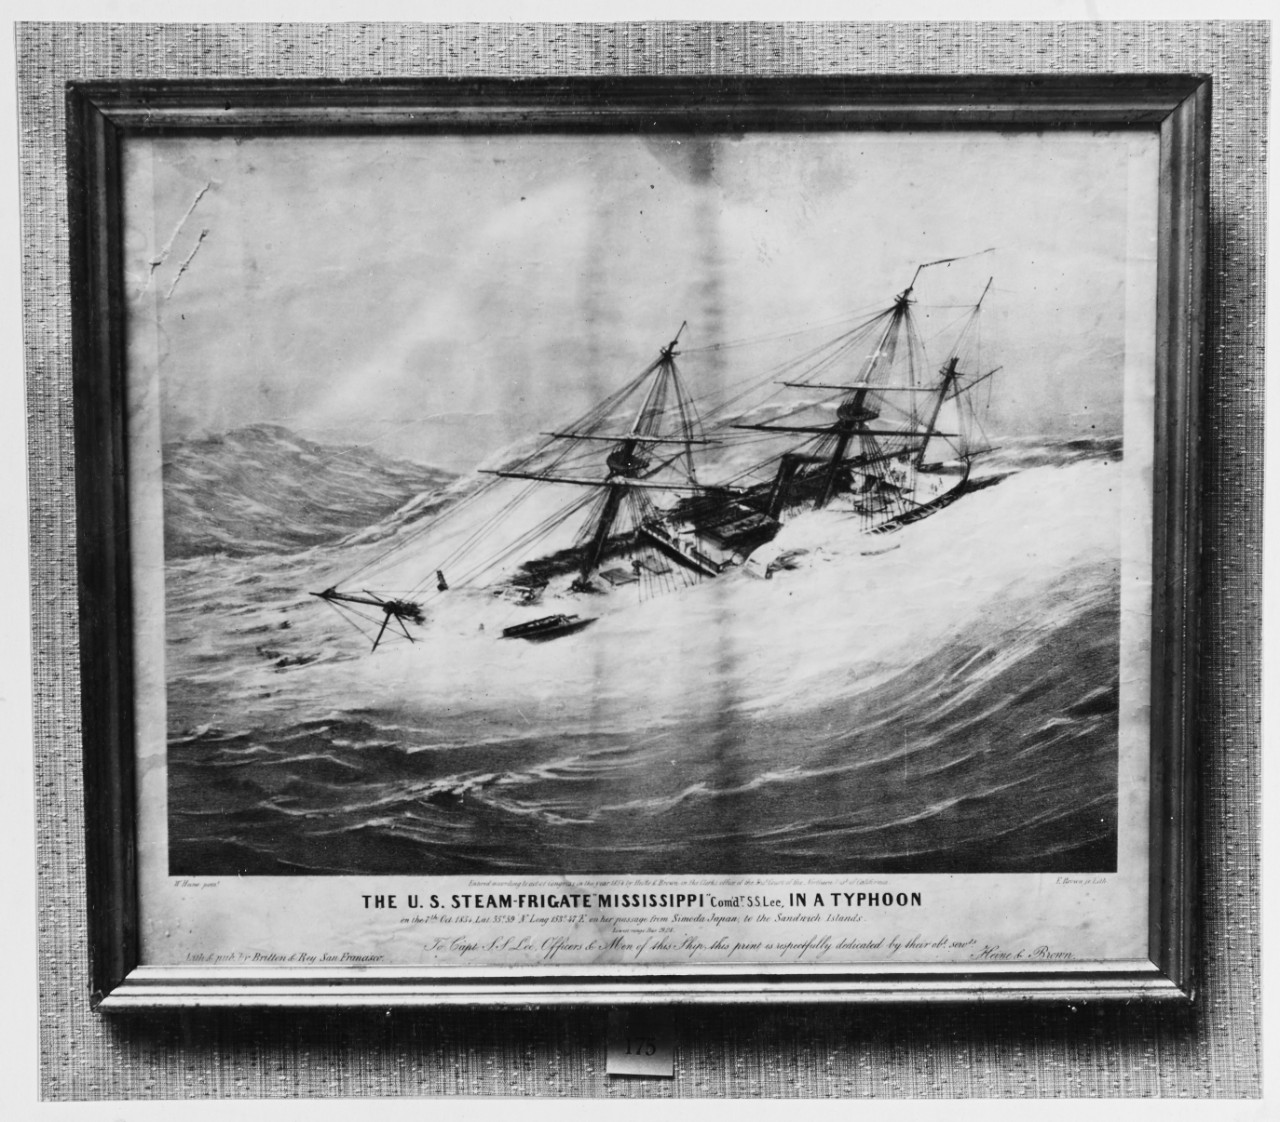 Steam frigate USS MISSISSIPPI (1839-1863)